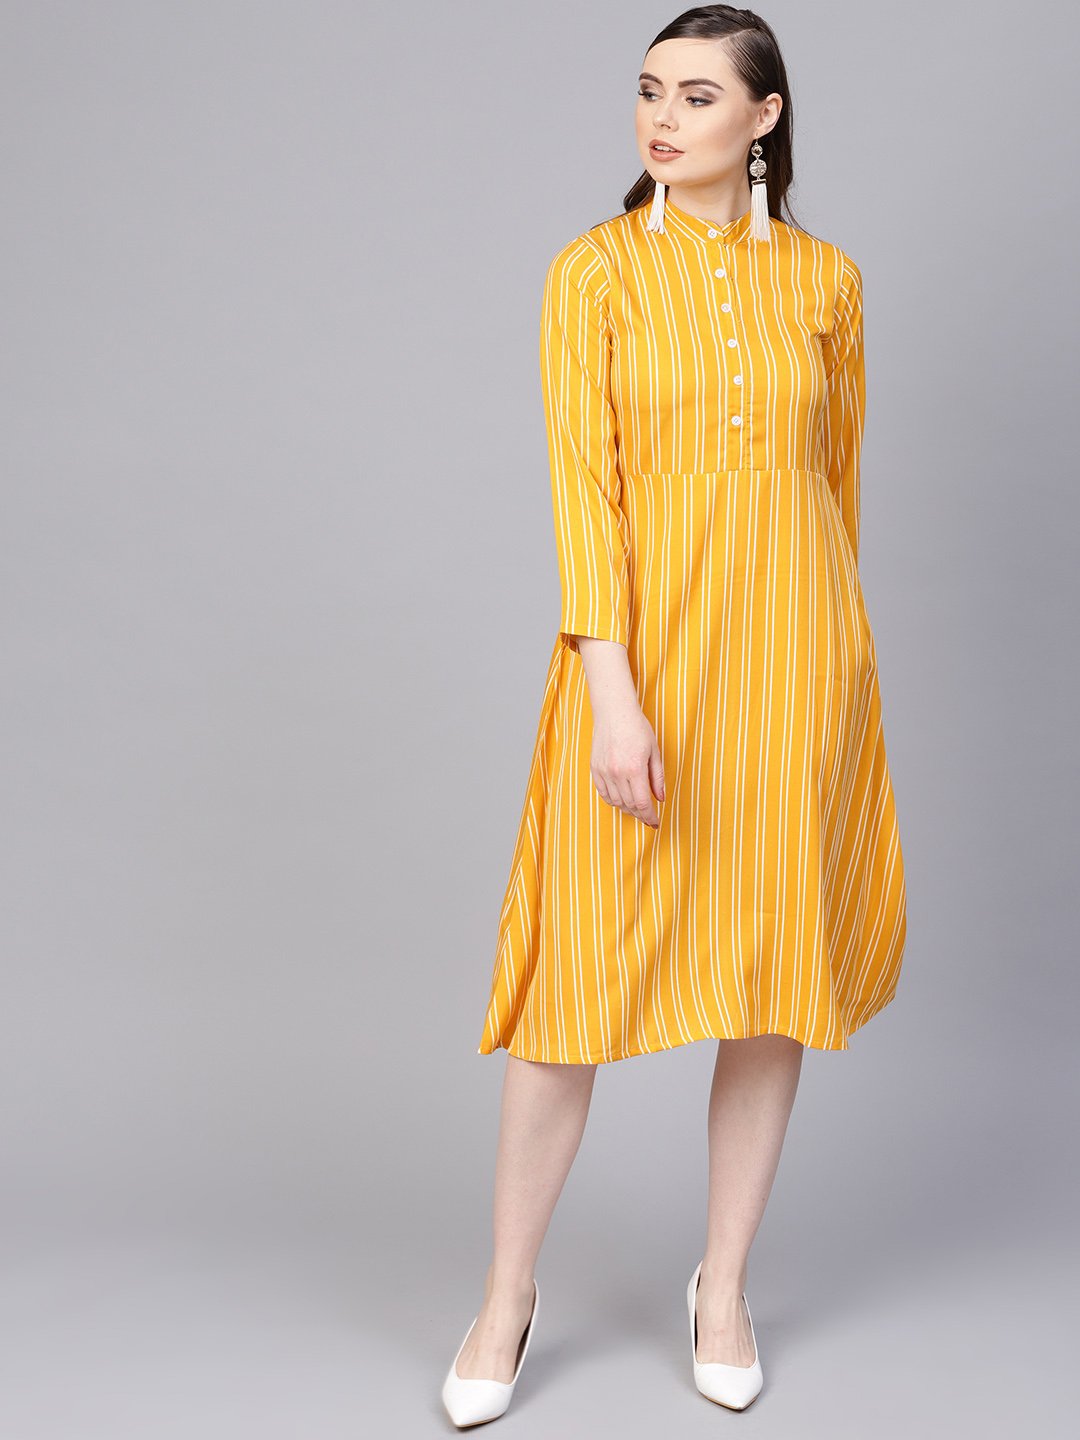 Women's Yellow & White Striped Dress With Madarin Collar & Full Sleeves - Nayo Clothing